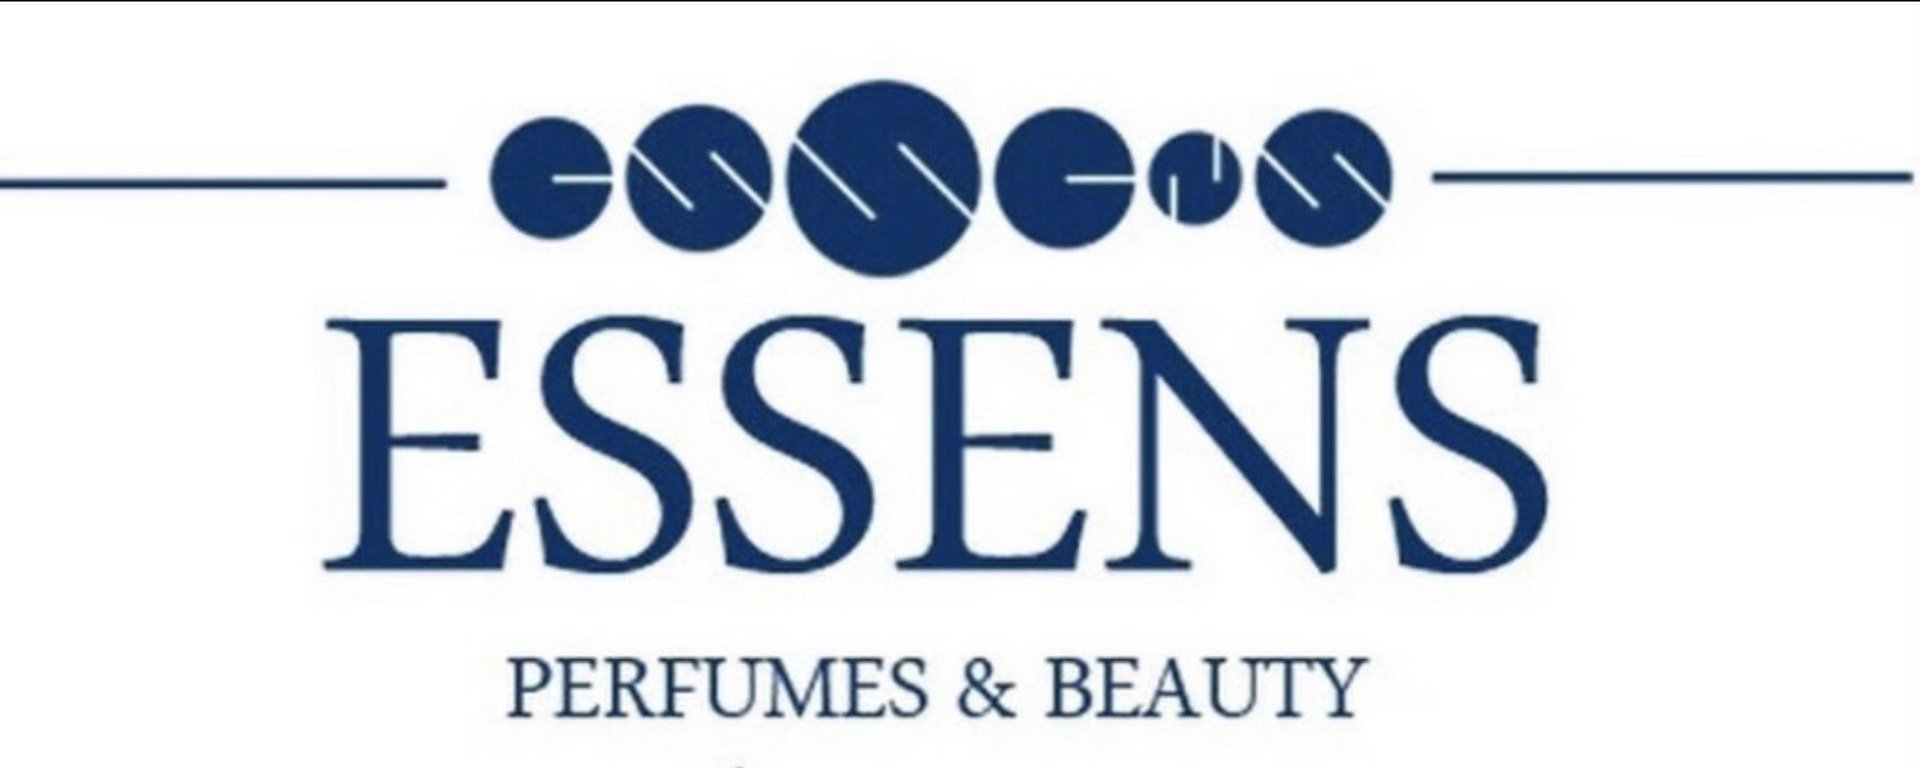 Эссенс россия личный. Логотип компании Эссенс. Essence духи логотип. Essens парфюмерия логотип. Эссенс логотип прозрачный.